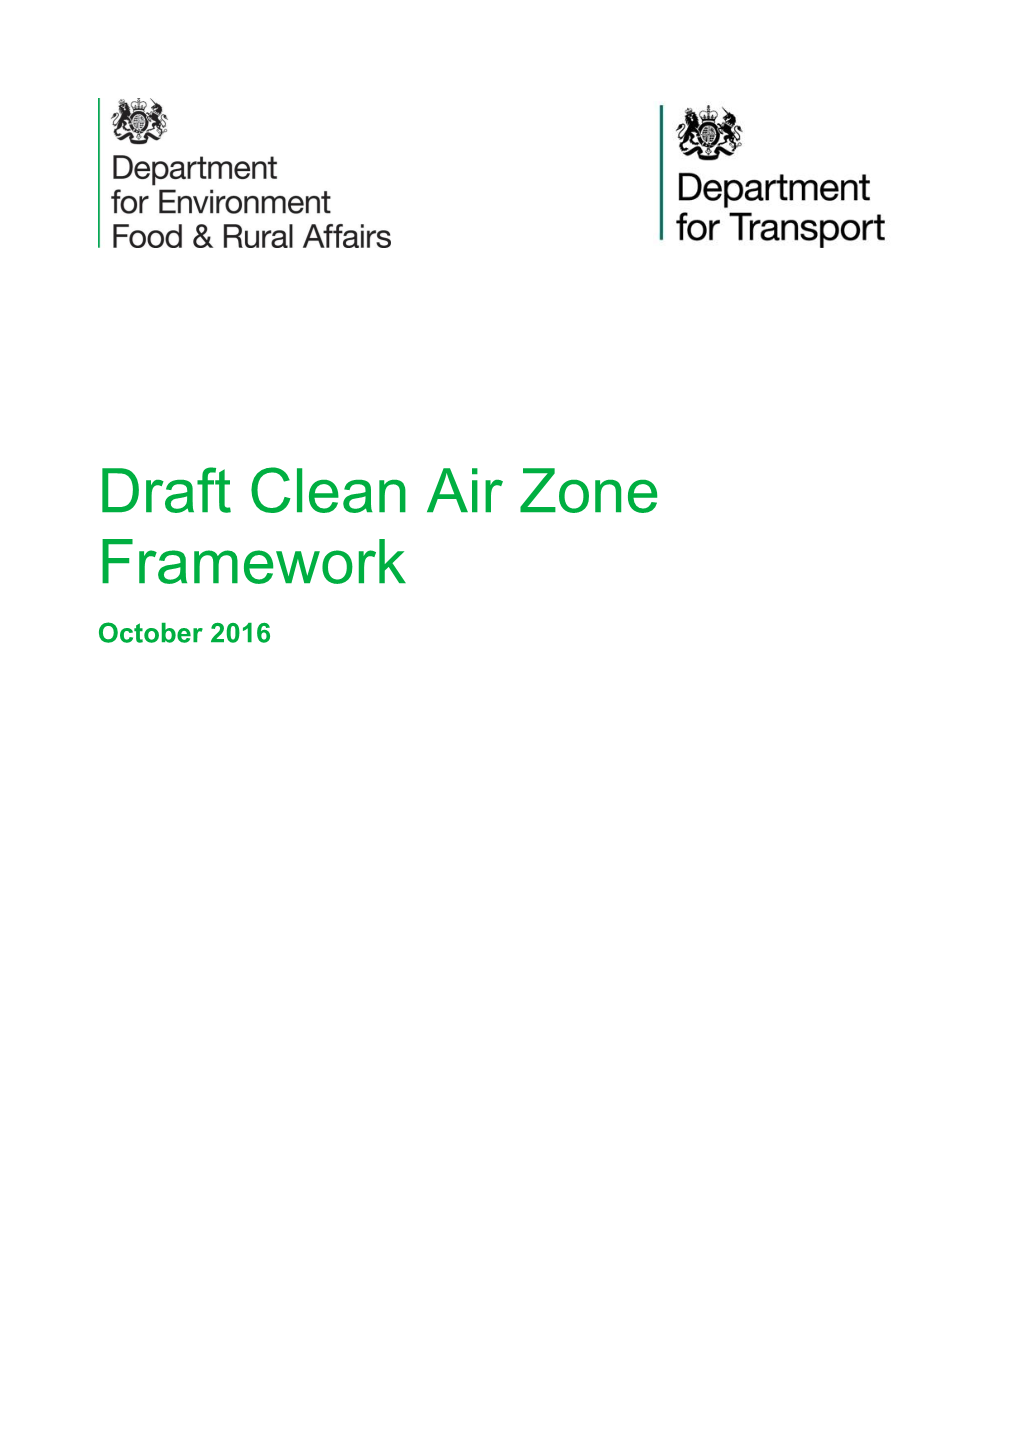 Draft Clean Air Zone Framework October 2016